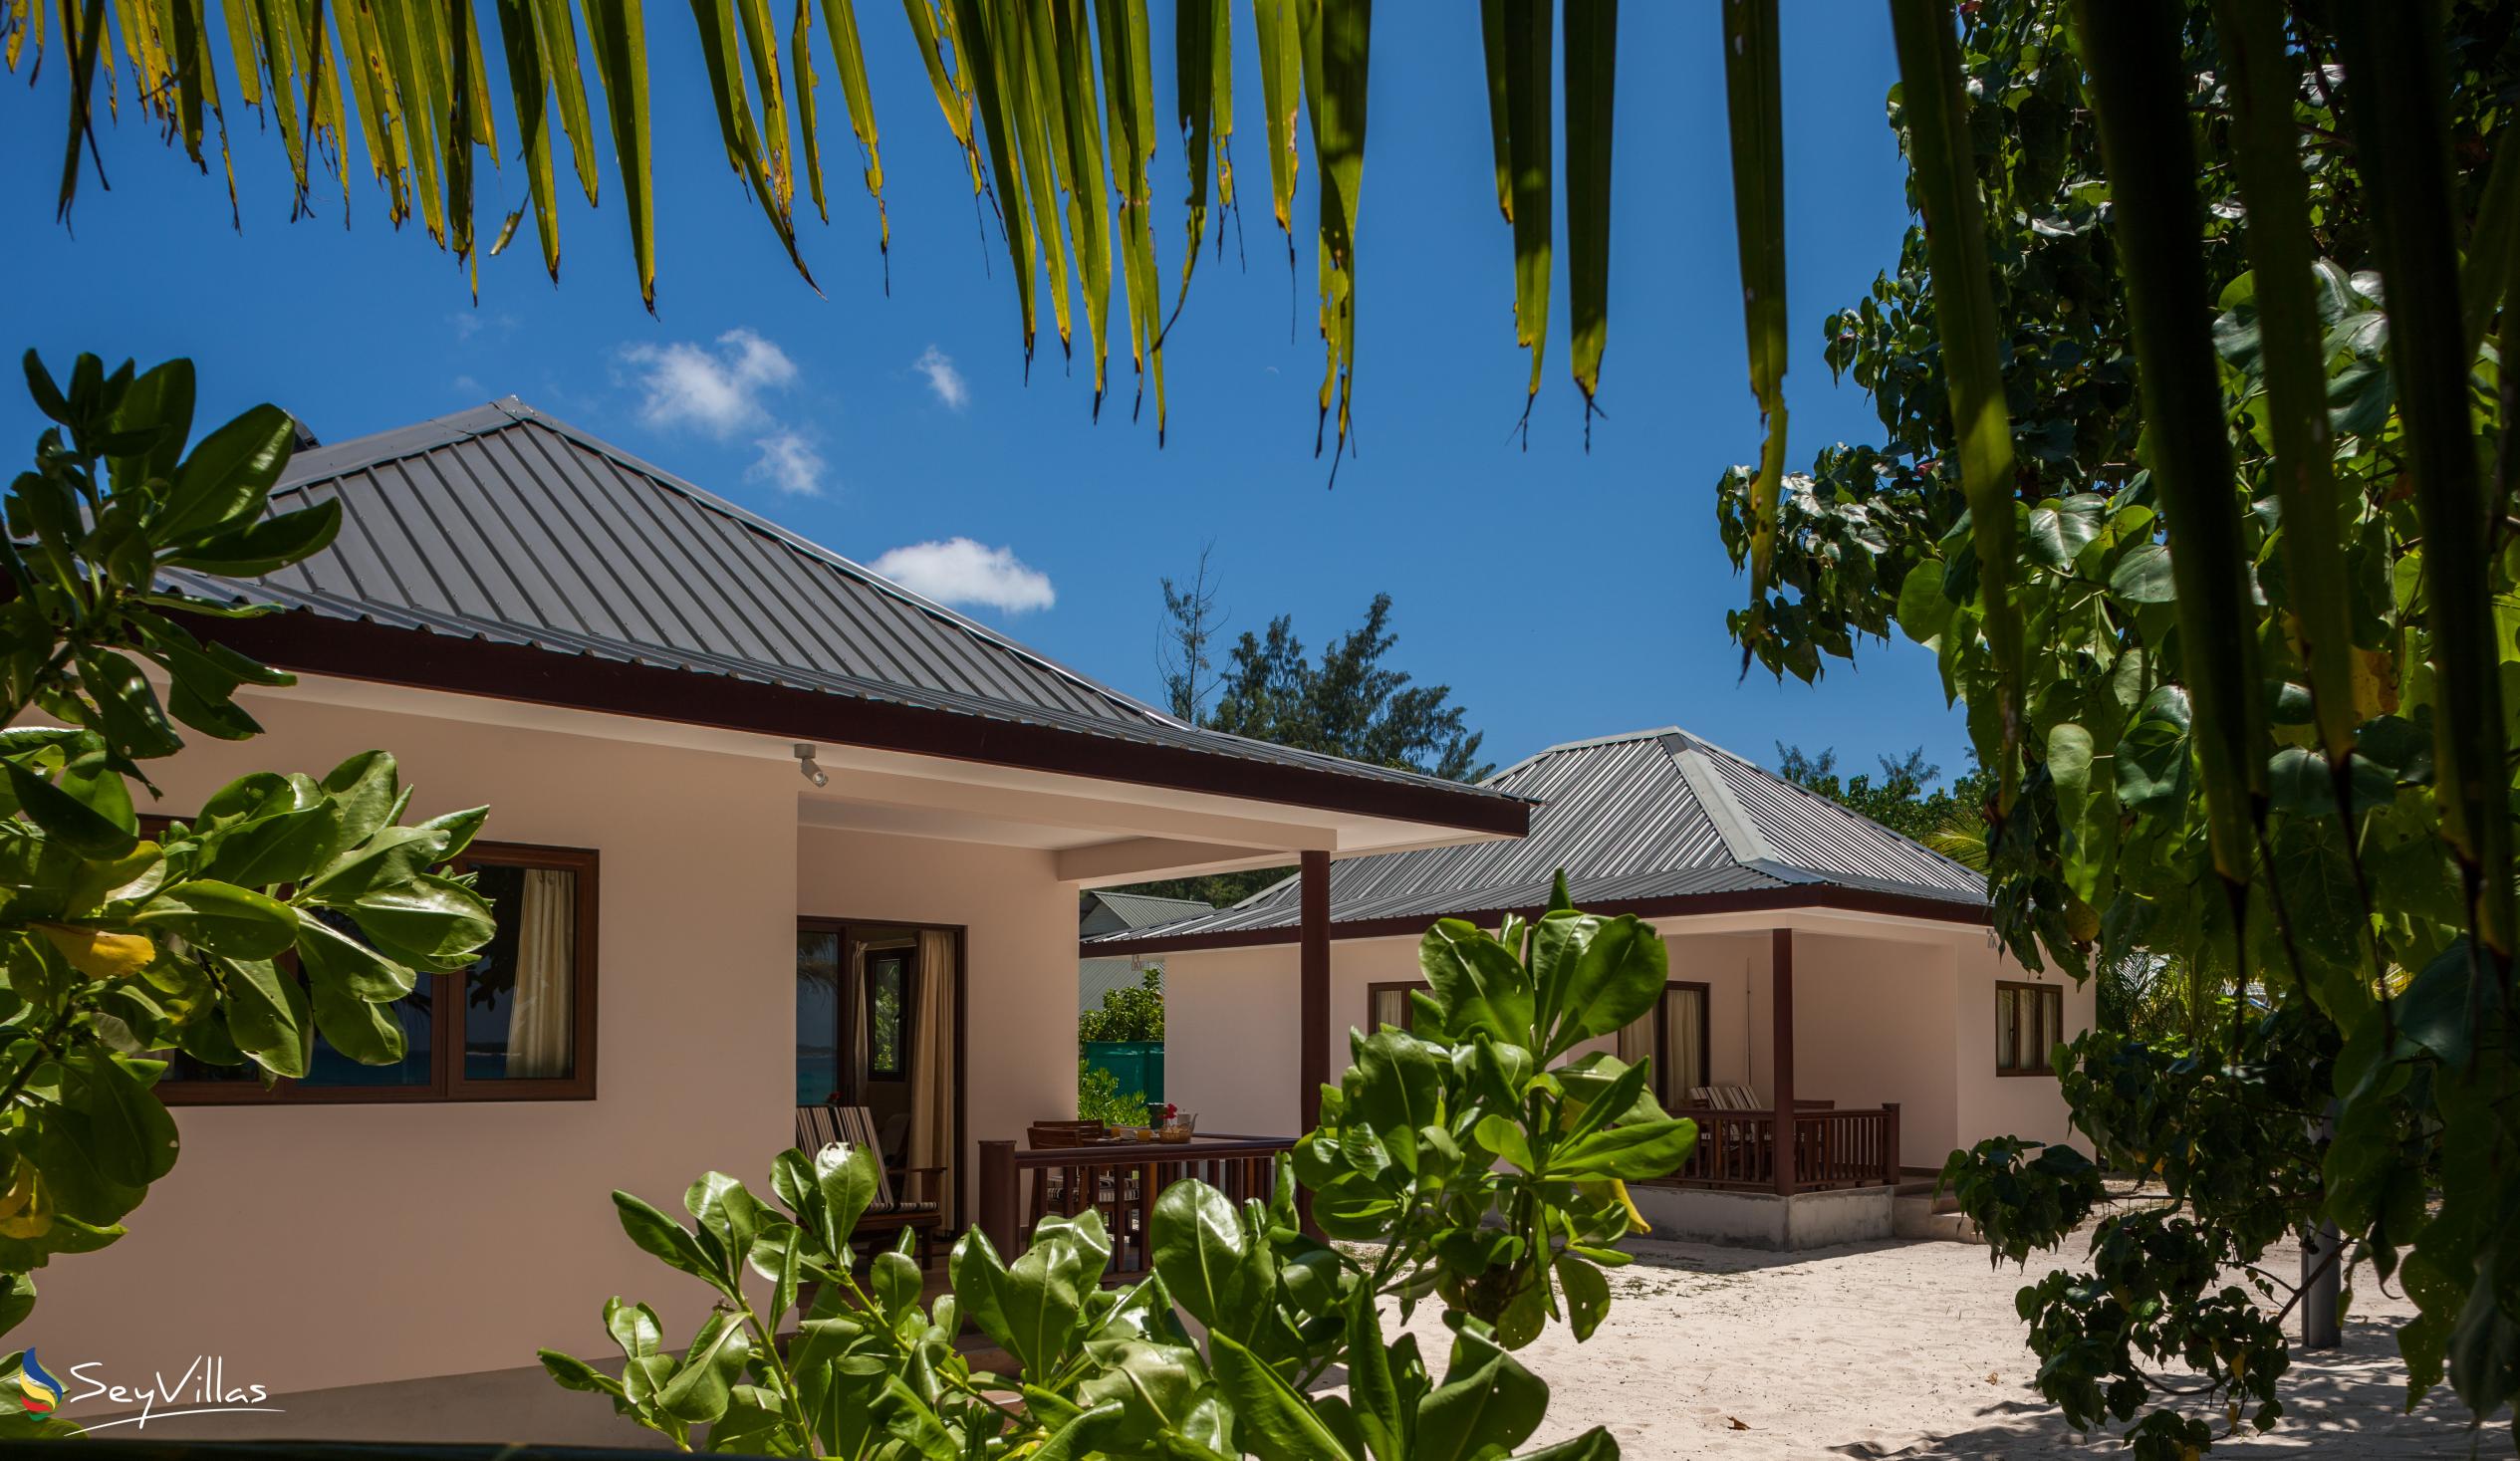 Photo 1: Villa Belle Plage - Outdoor area - Praslin (Seychelles)